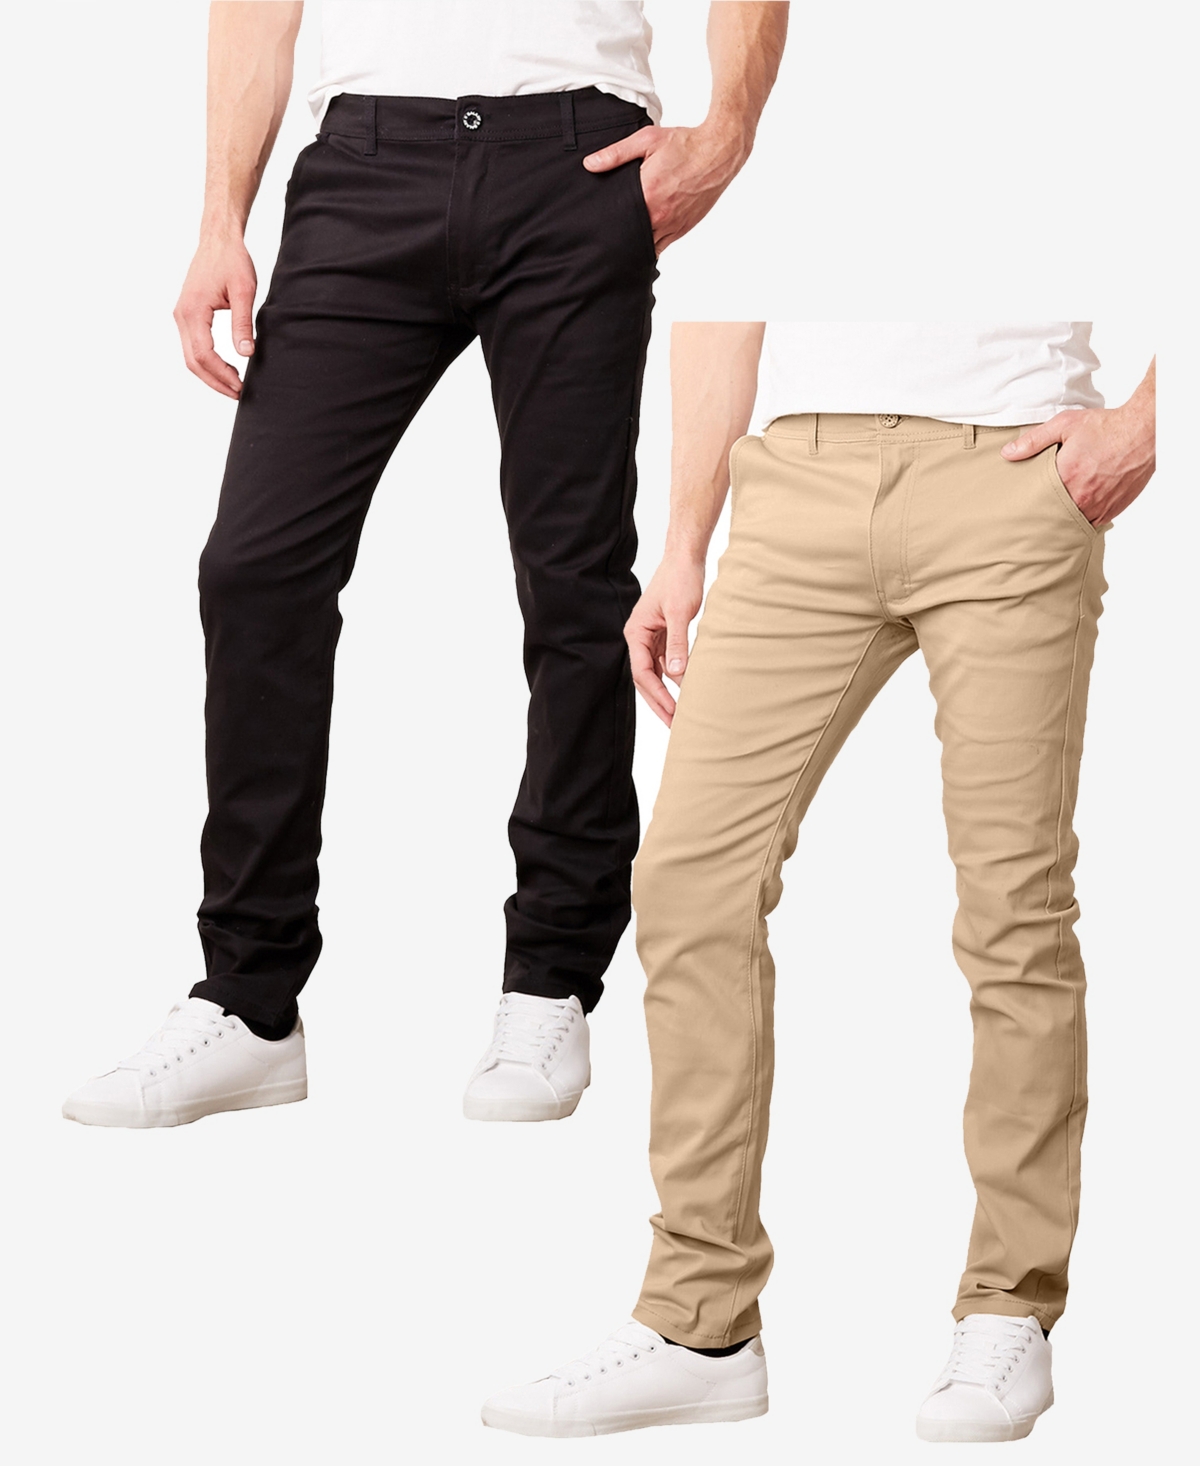 Men's Super Stretch Slim Fit Everyday Chino Pants, Pack of 2 - Dark Khaki Khaki